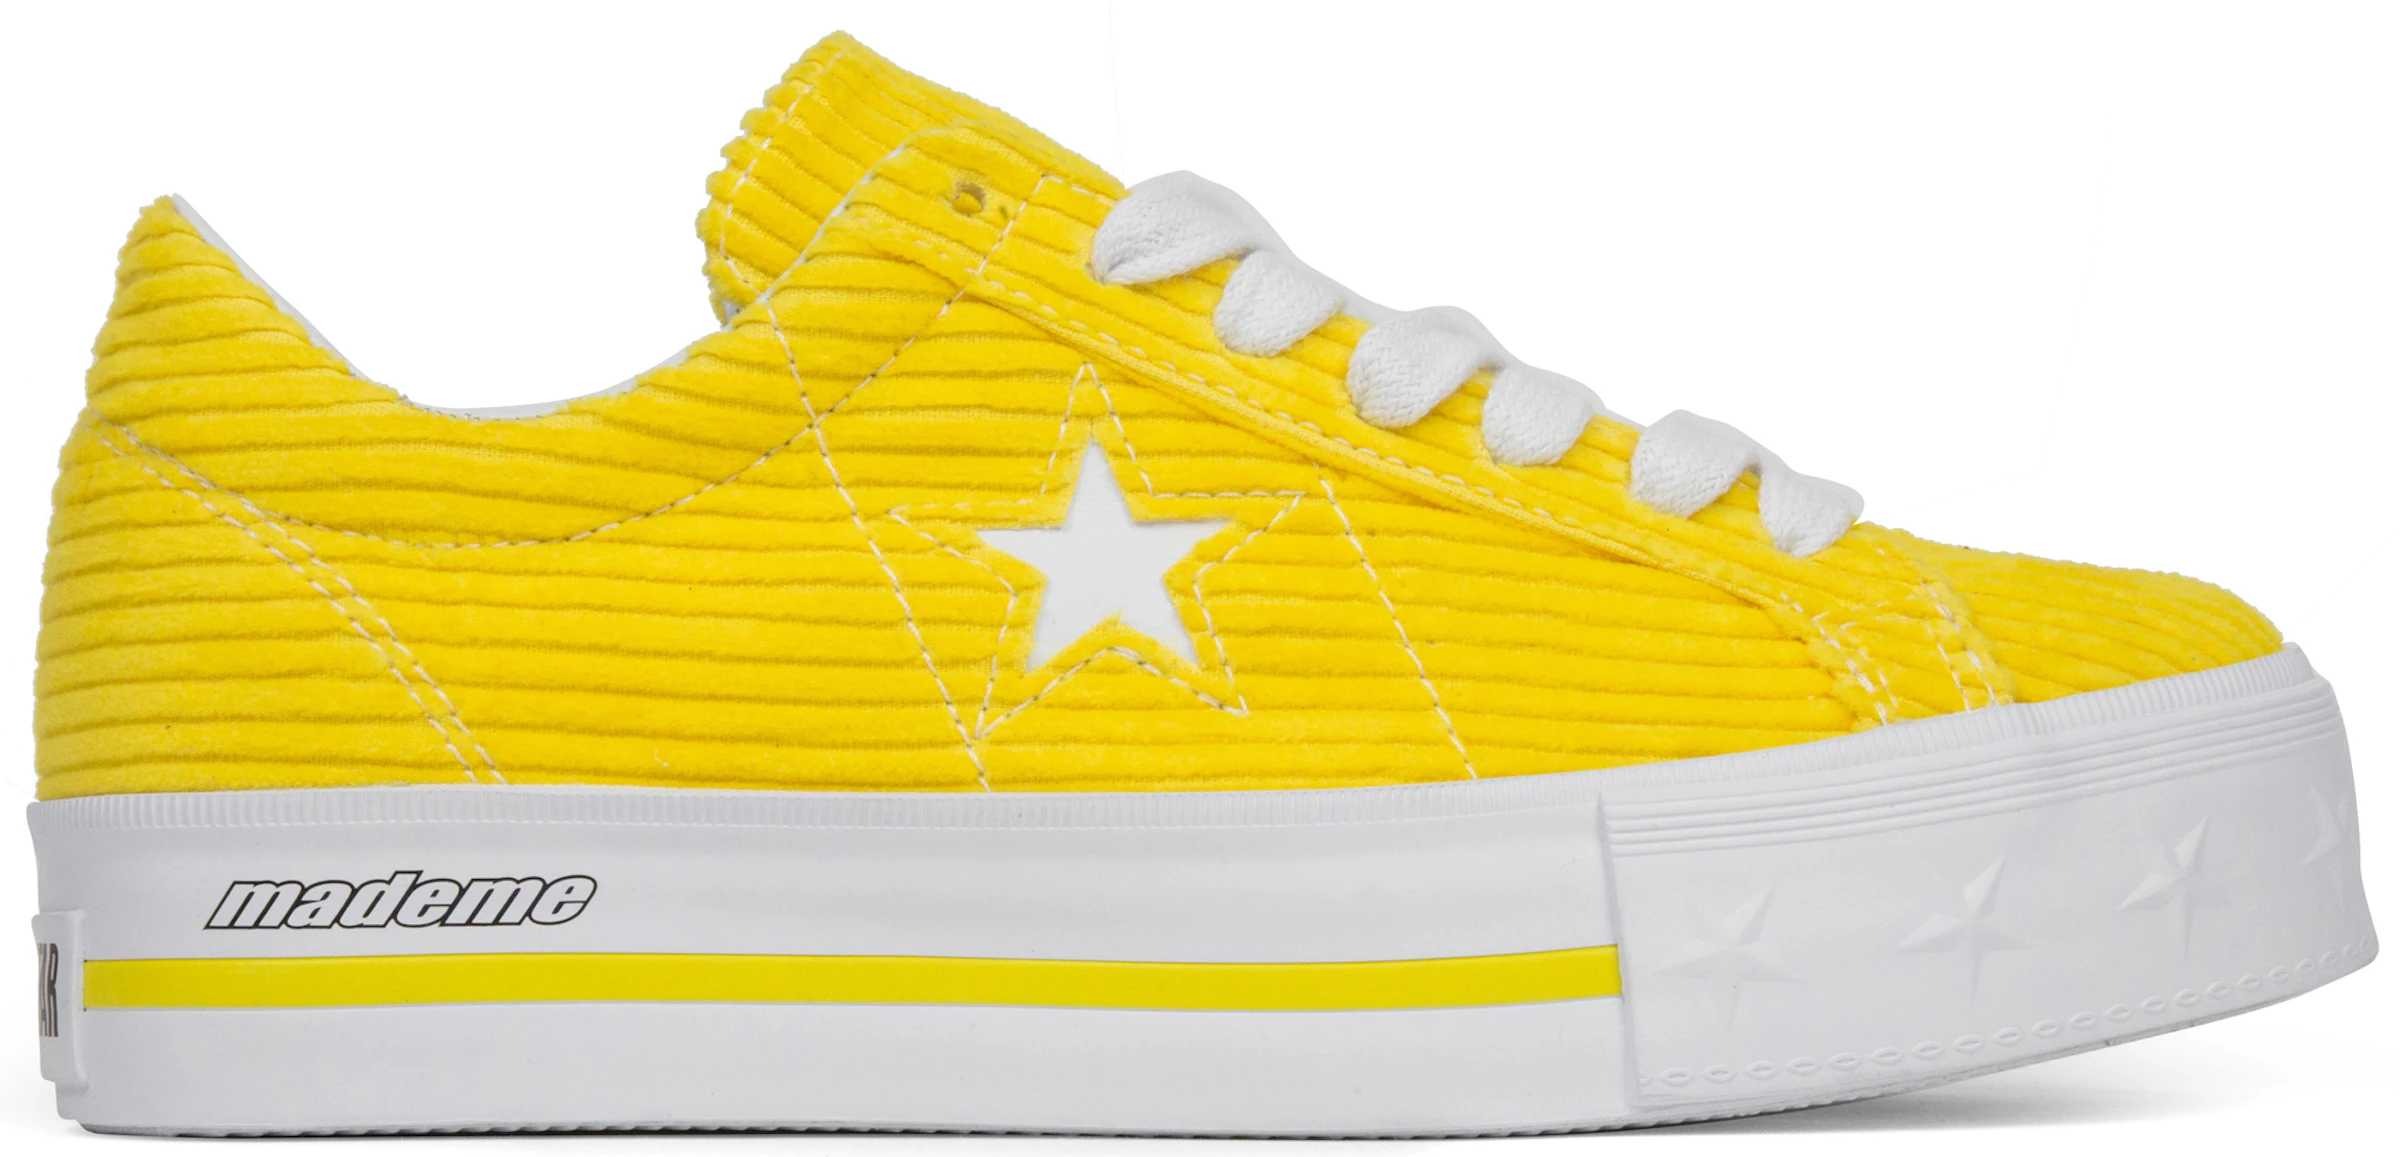 Converse One Star Ox Vibrant Yellow (W) - 561393C - ES